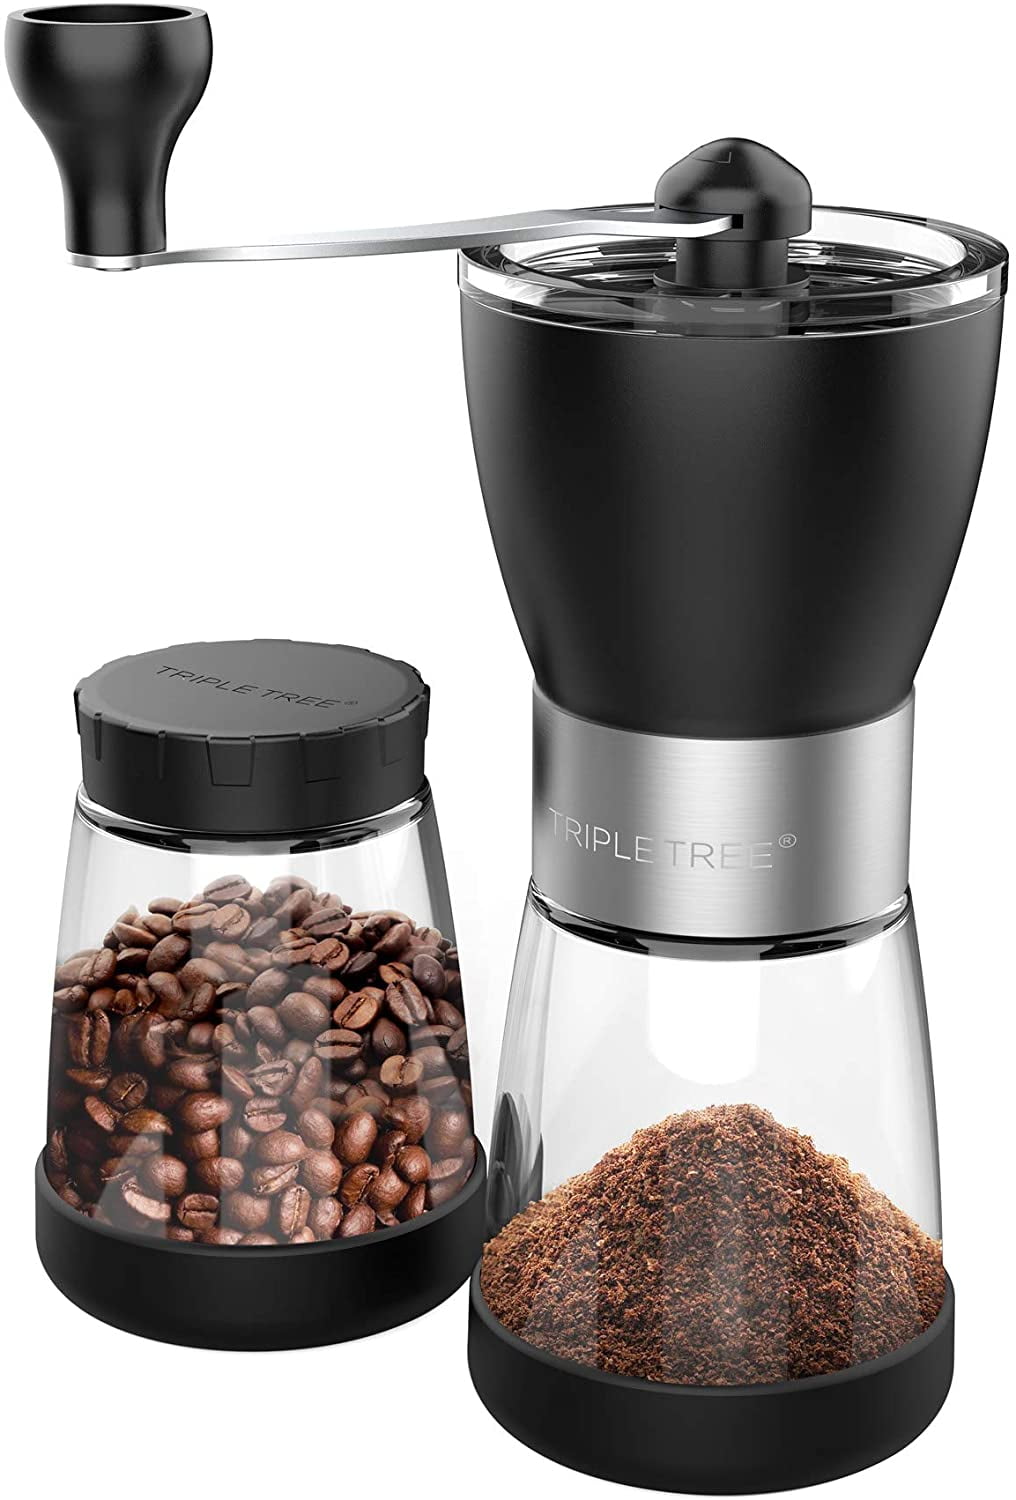 Coffee Grinders – The Kaffeeklatsch